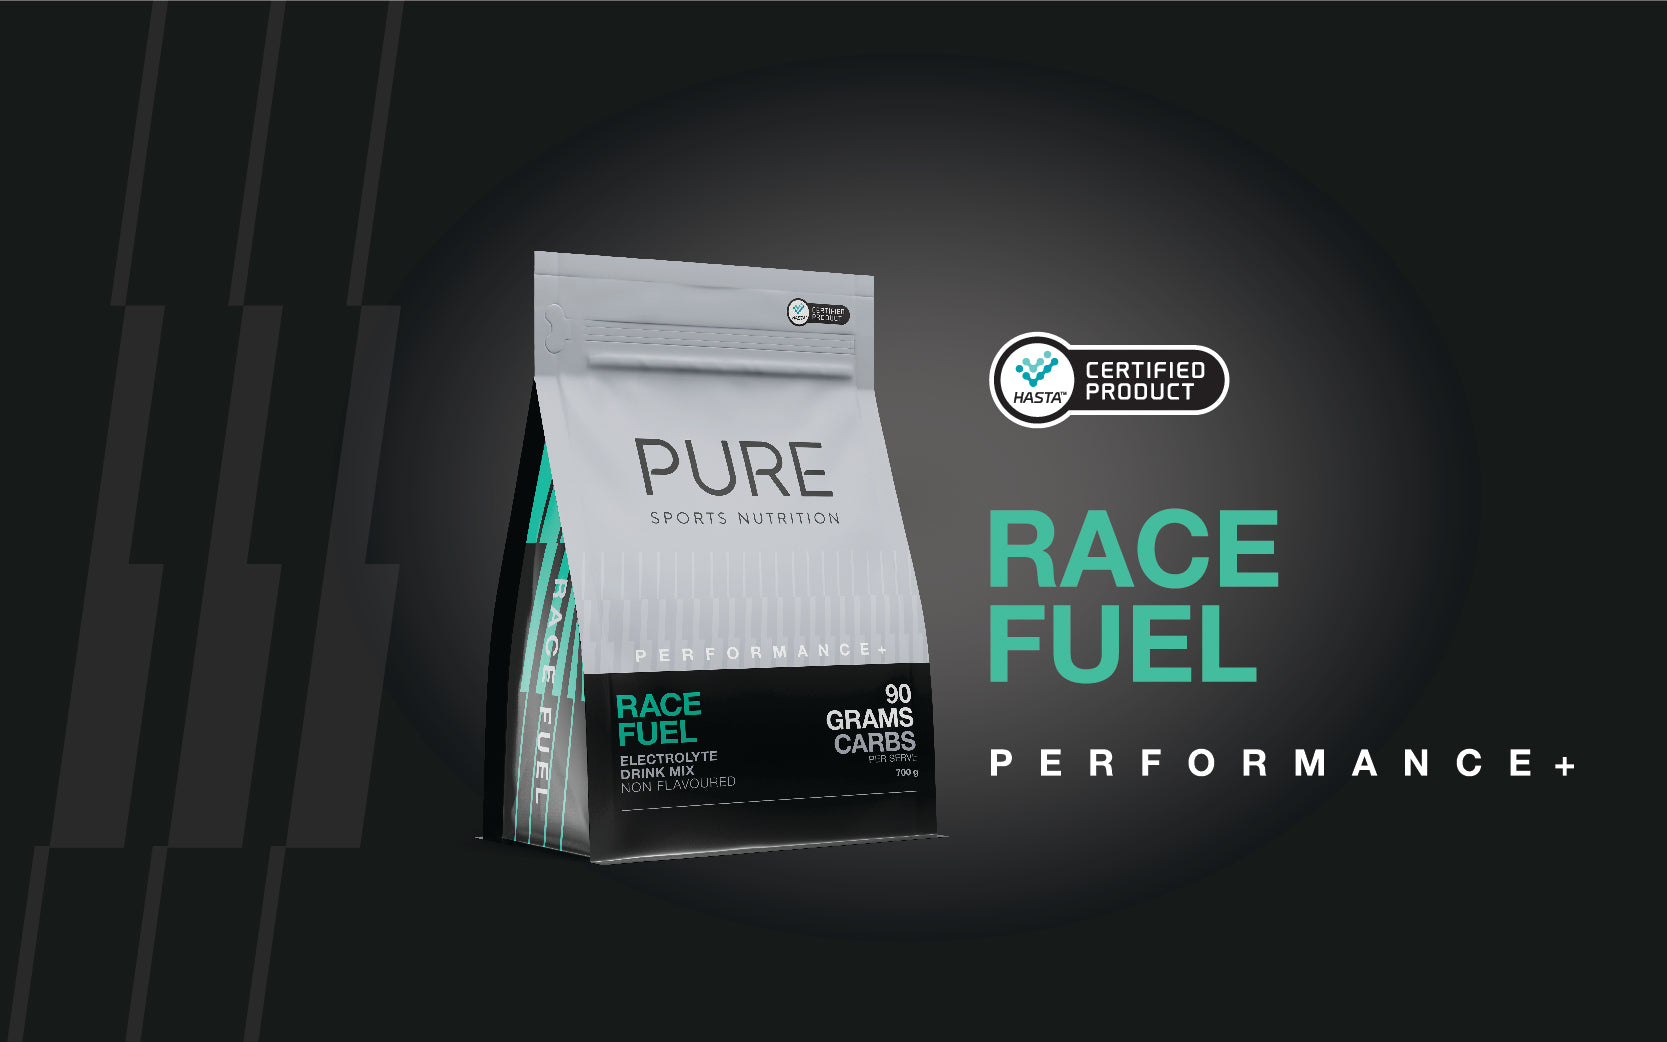 PURE Performance + Race Fuel Explained